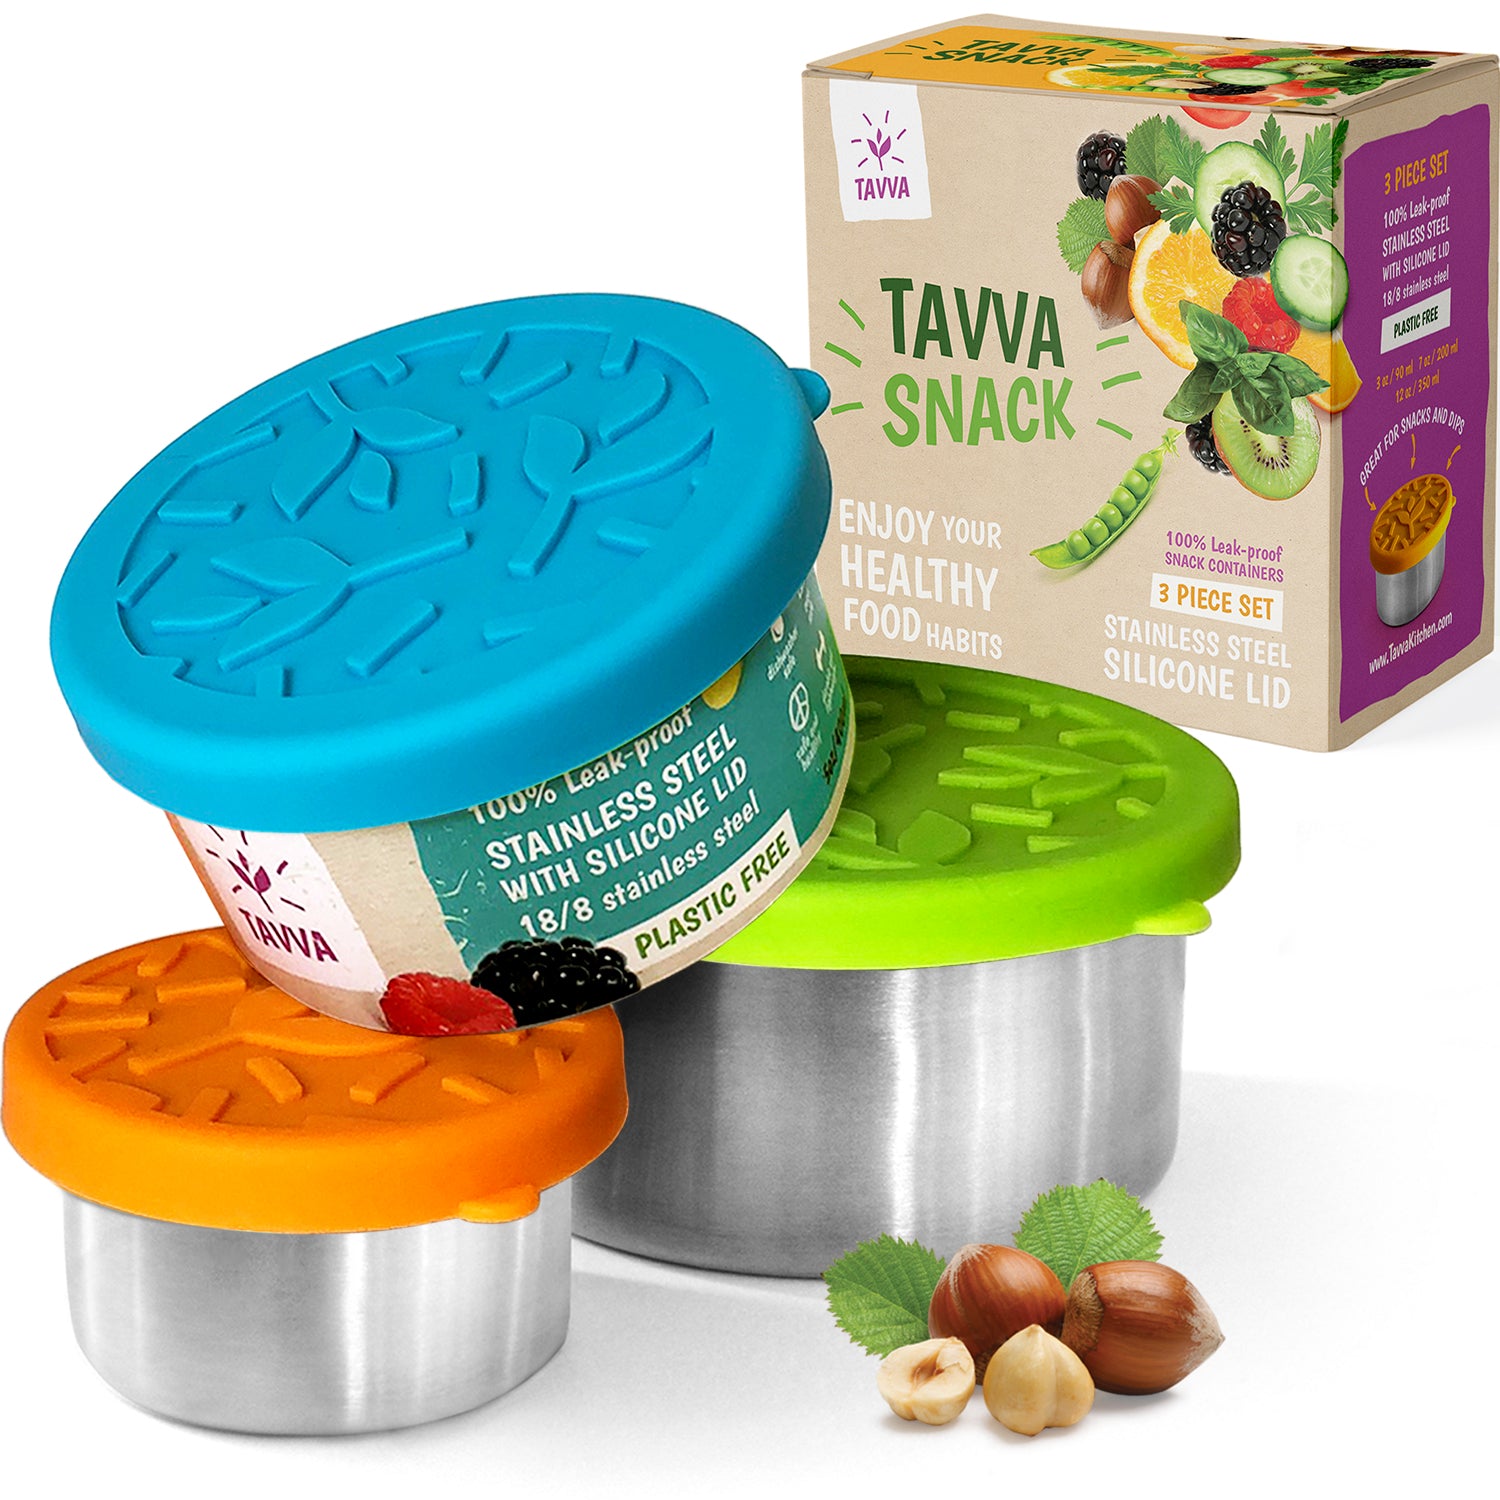 TAVVA tavva stainless steel food containers - plastic free